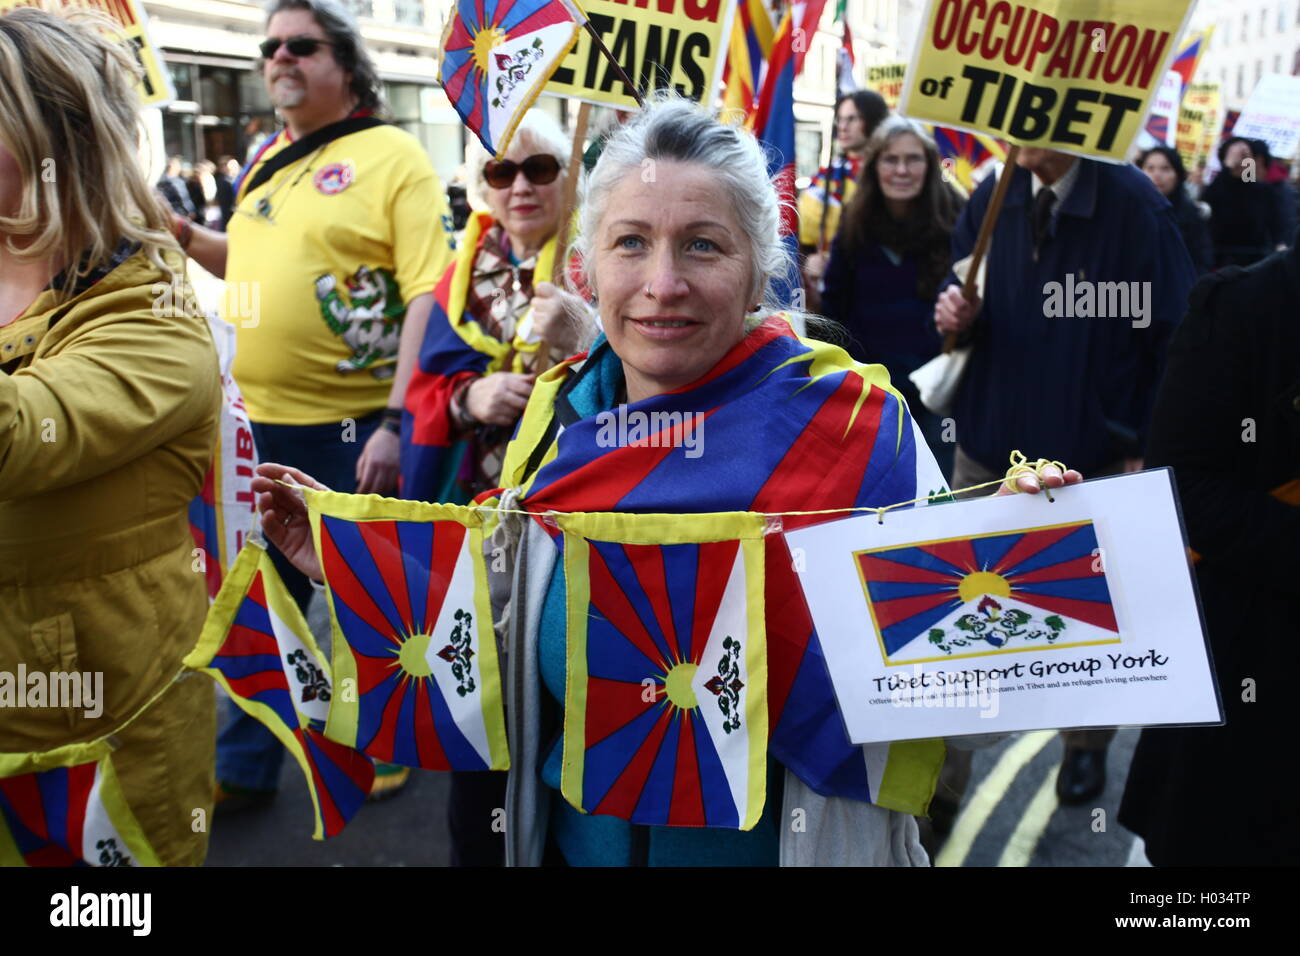 Demonstration für freies Tibet, London, UK Stockfoto